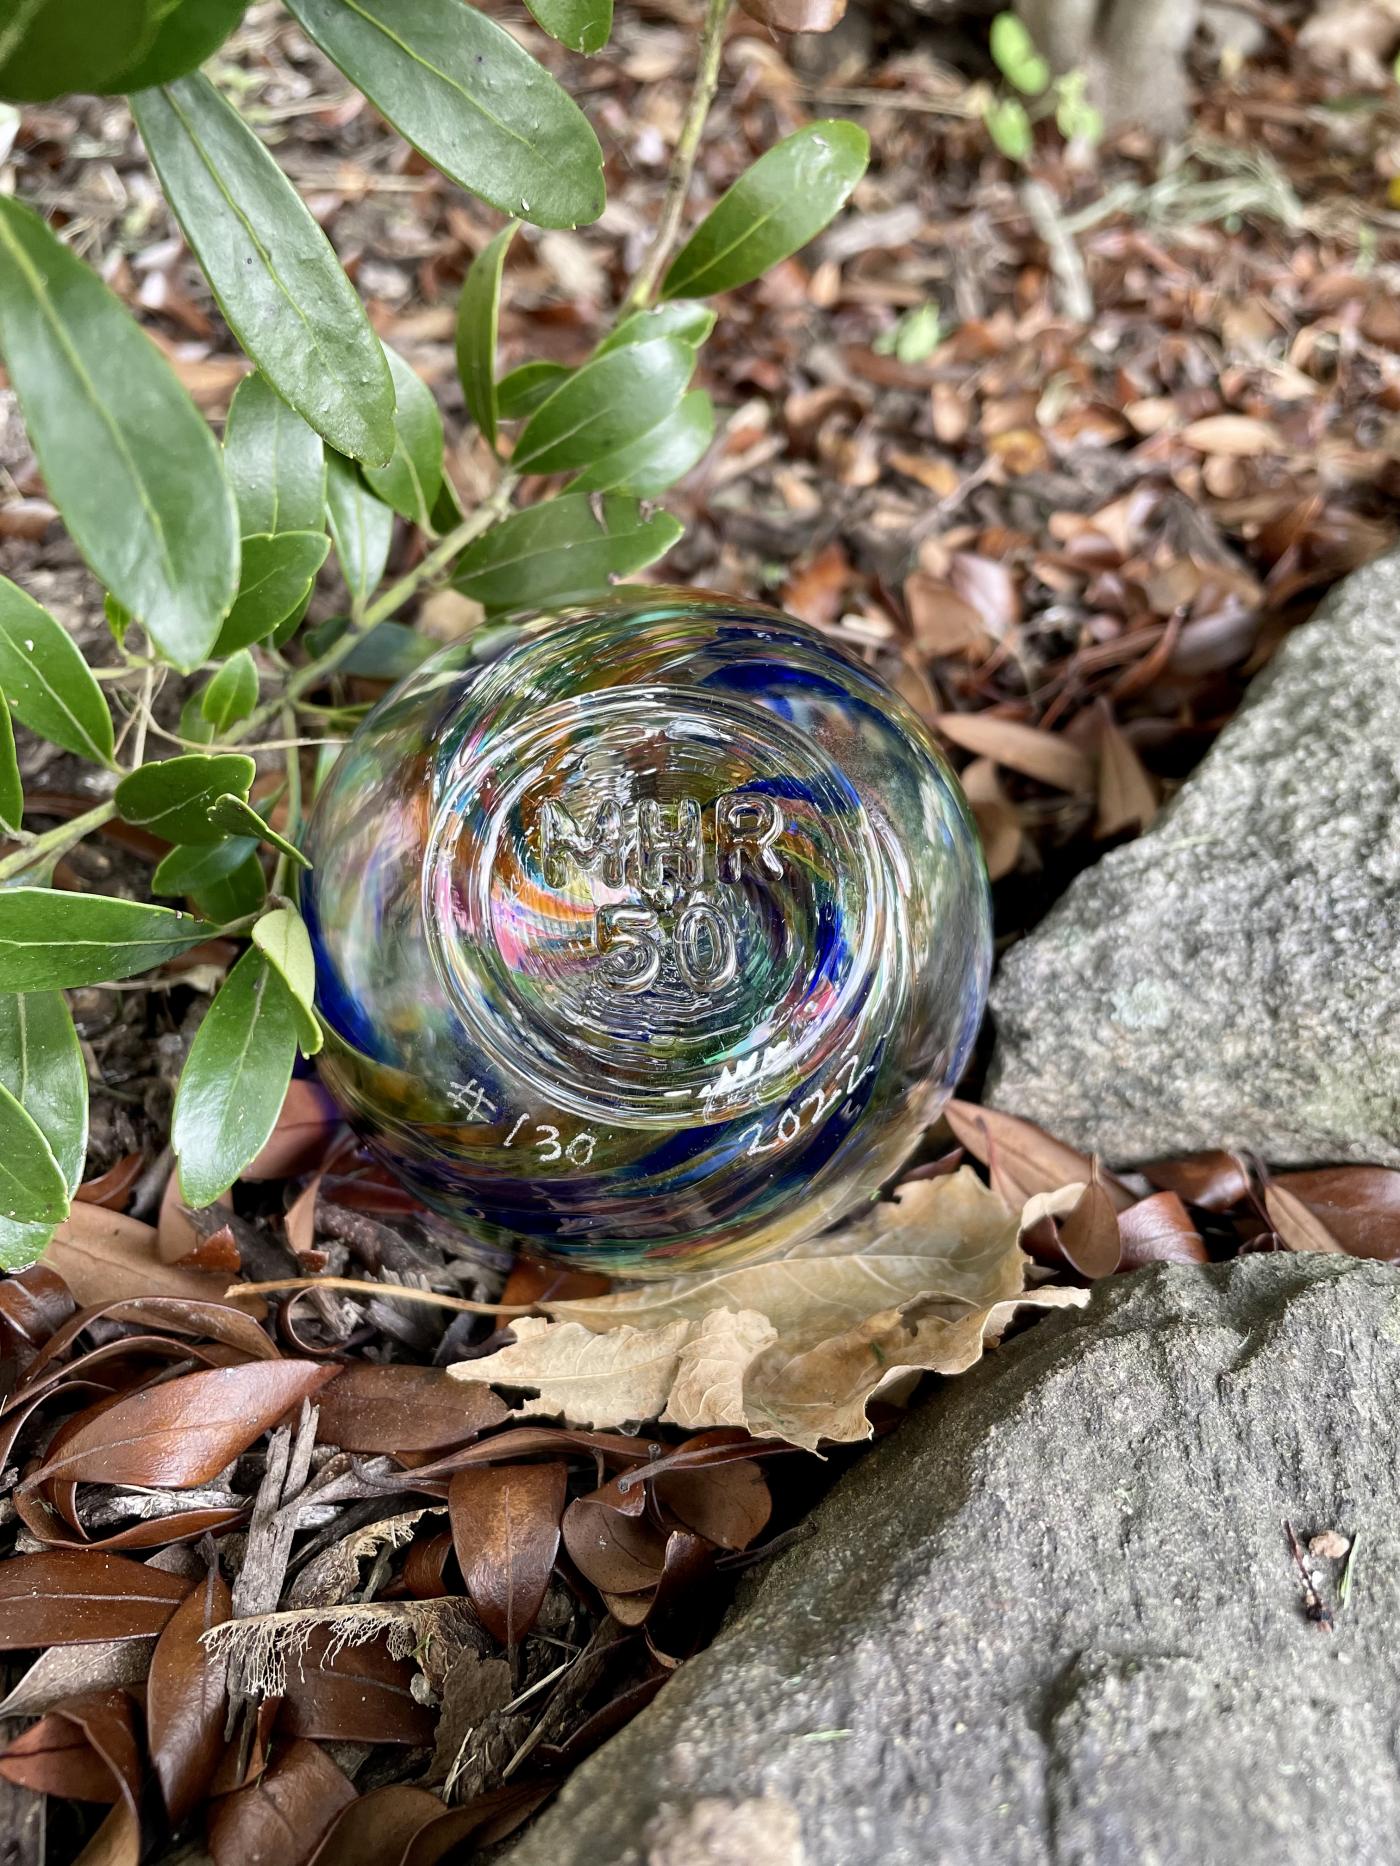  Merwinsville Hotel glass sphere treasure hunt